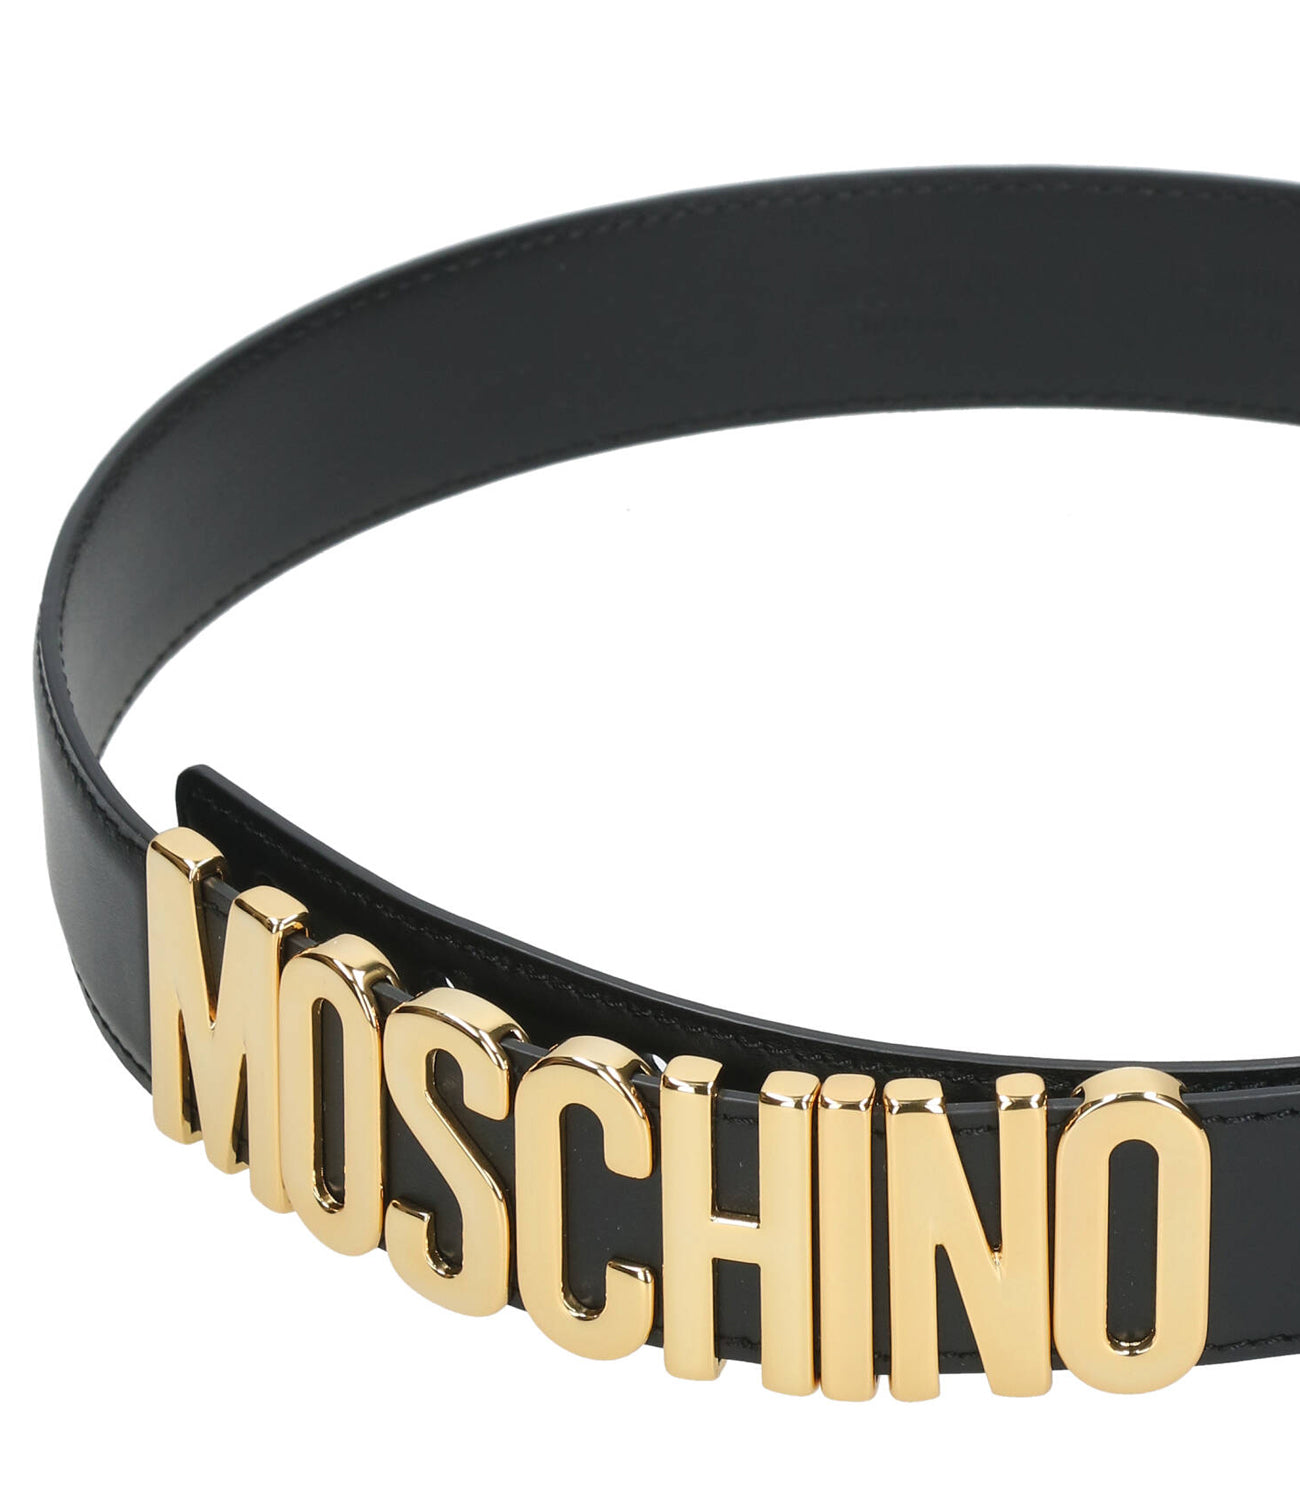 Moschino | Black Belt